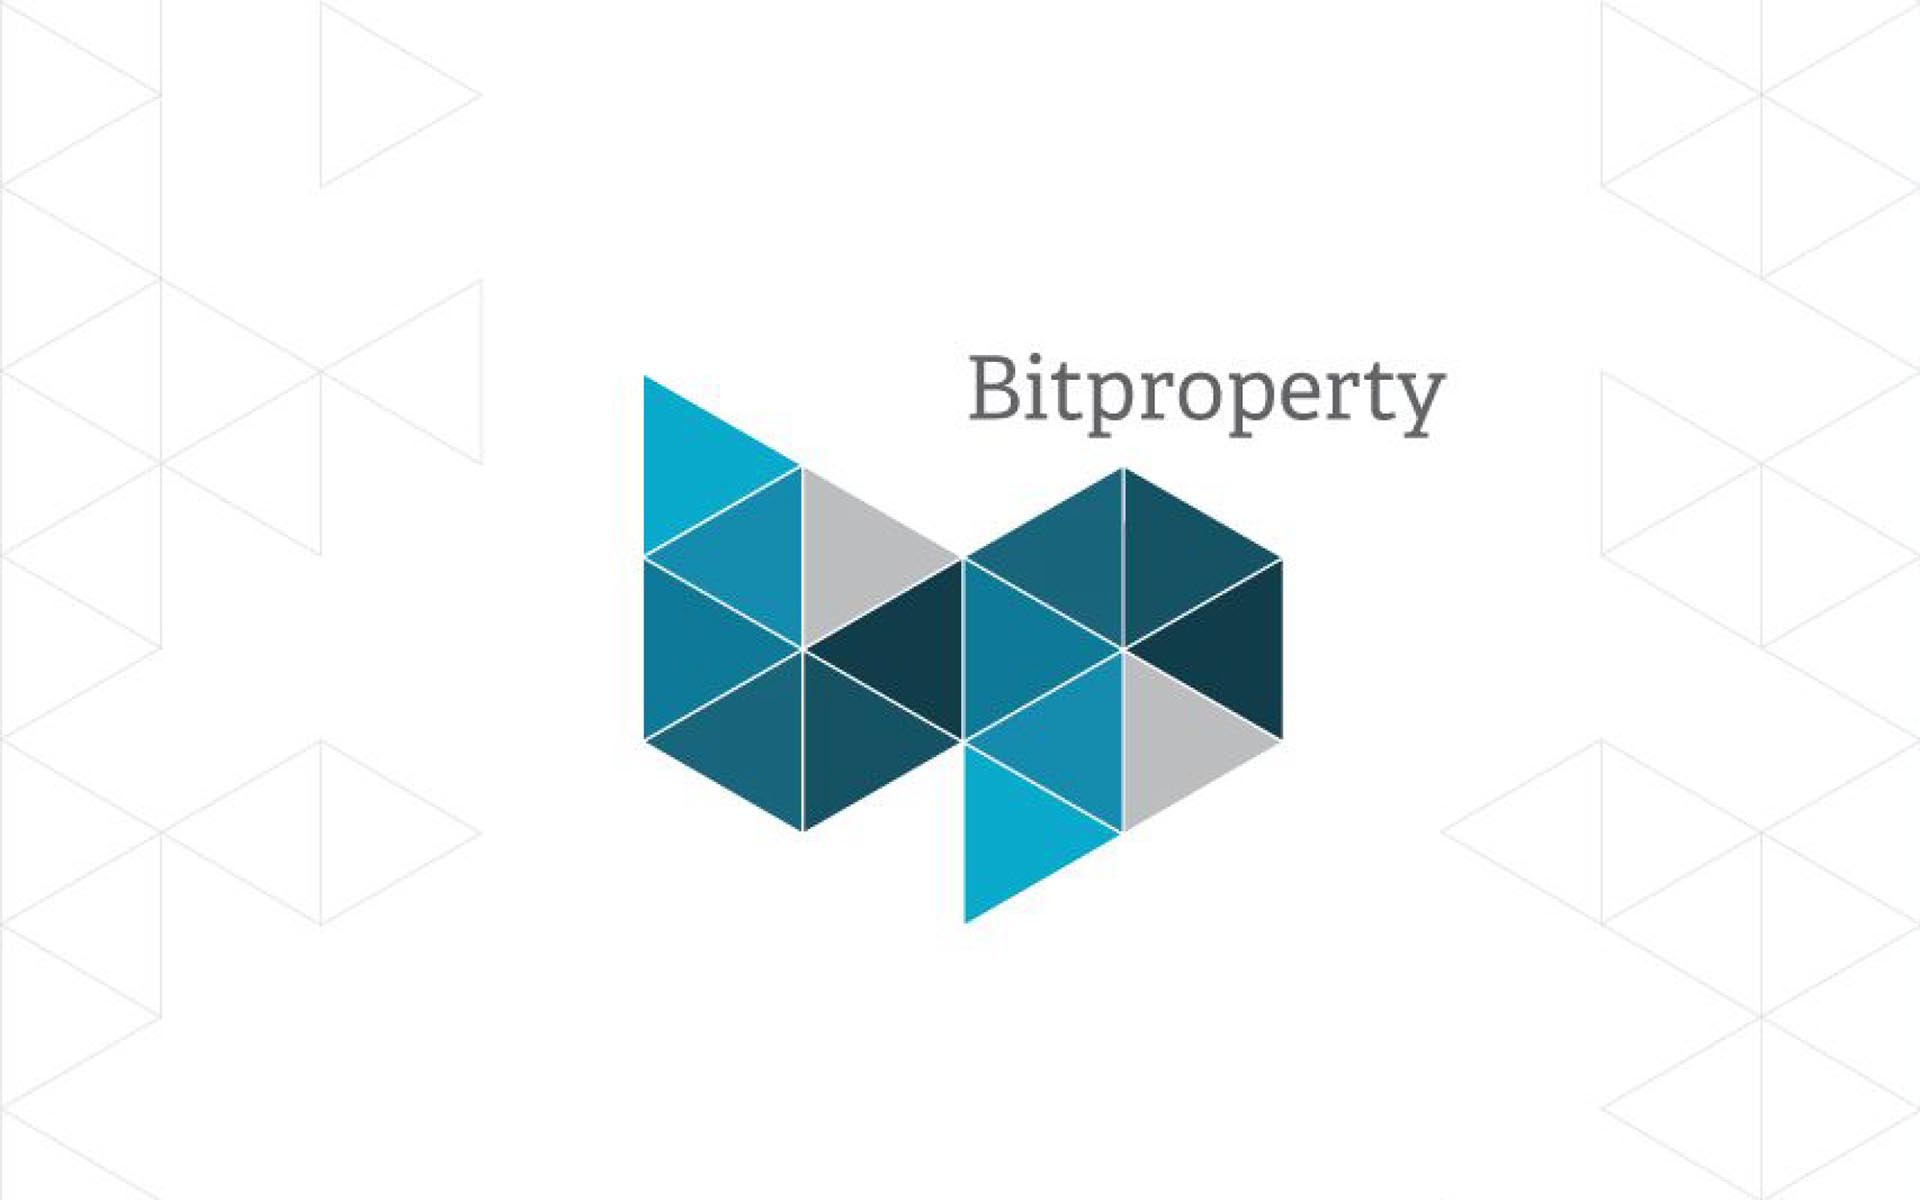 BitProperty Announces Upcoming Token Sale, Beta Release of Real Estate Investment Platform